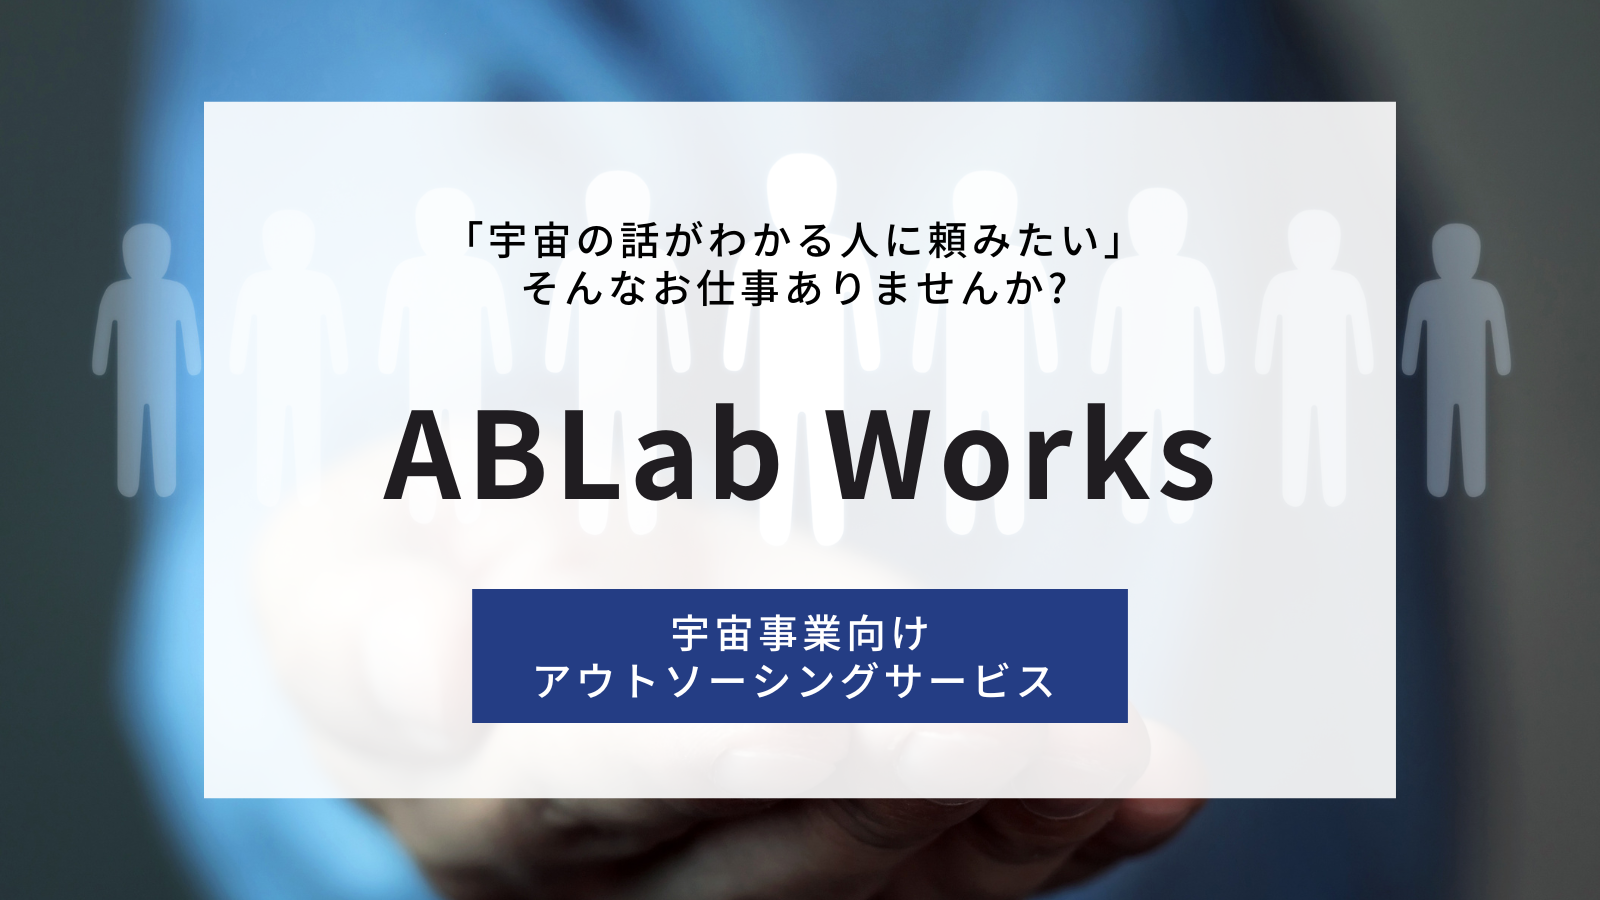 ABLab、宇宙ビジネス向けアウトソーシングサービス「ABLab Works」の提供を開始